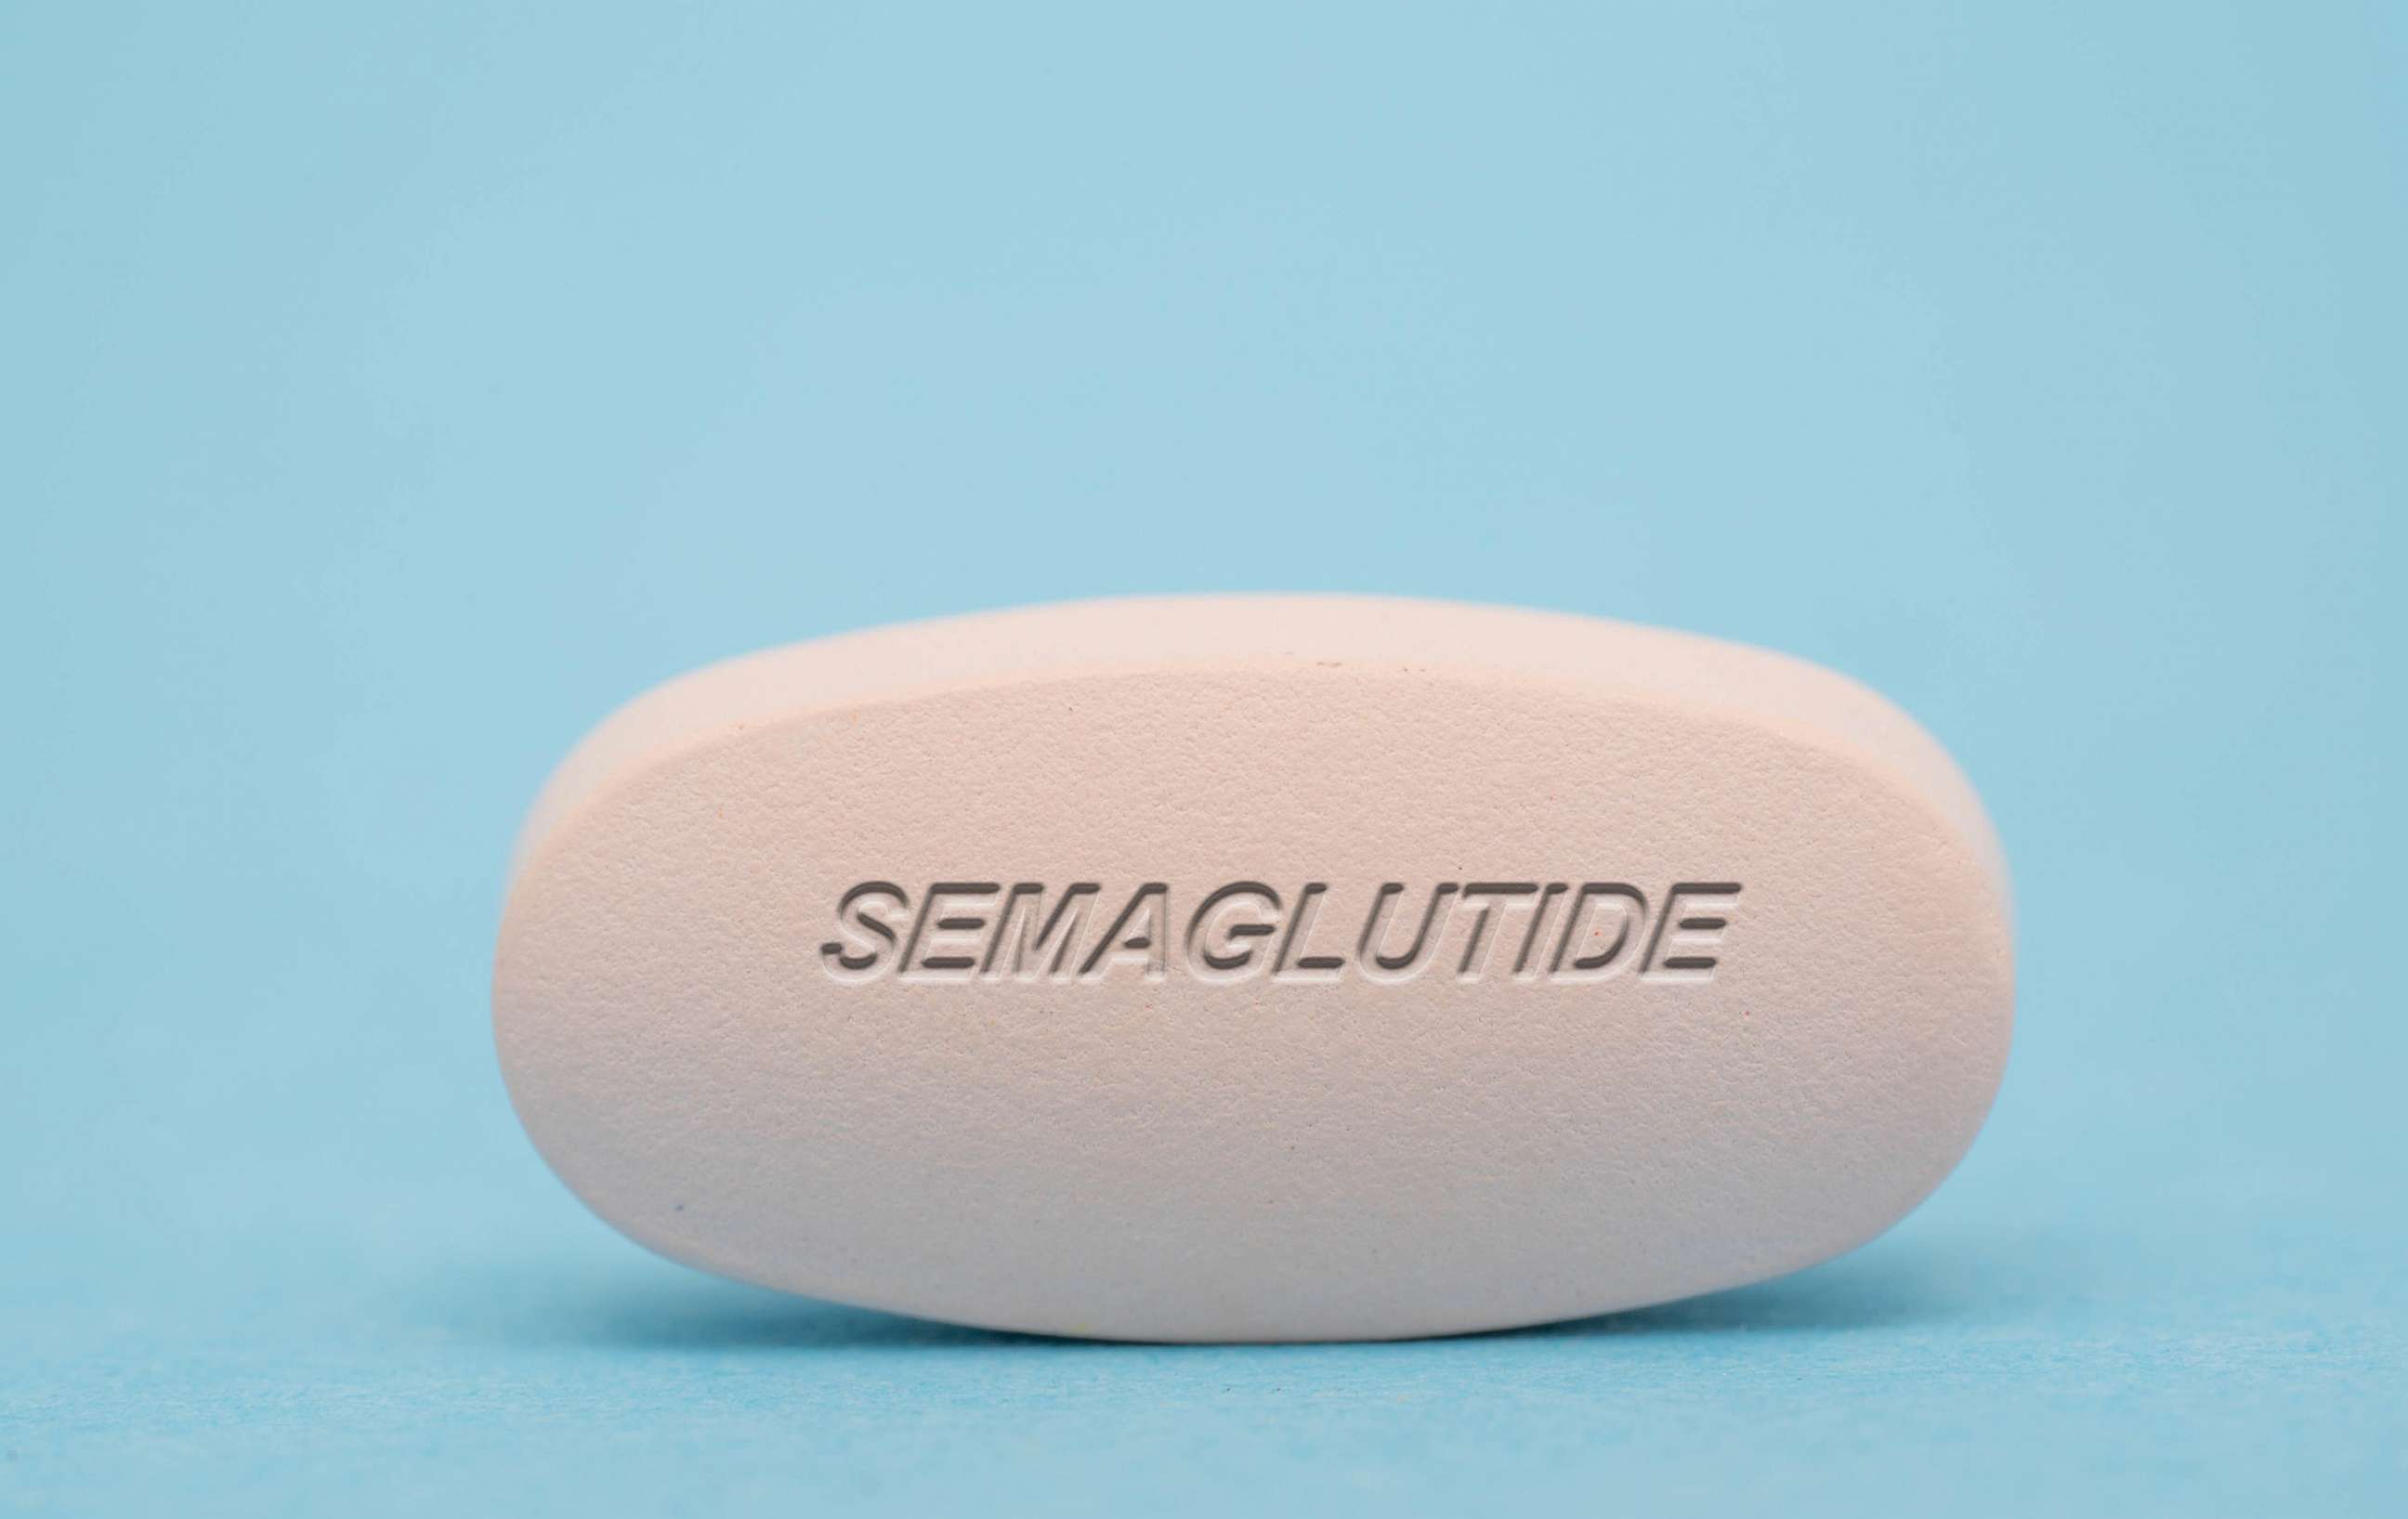 PHOTO: A Semaglutide pill photo illustration.